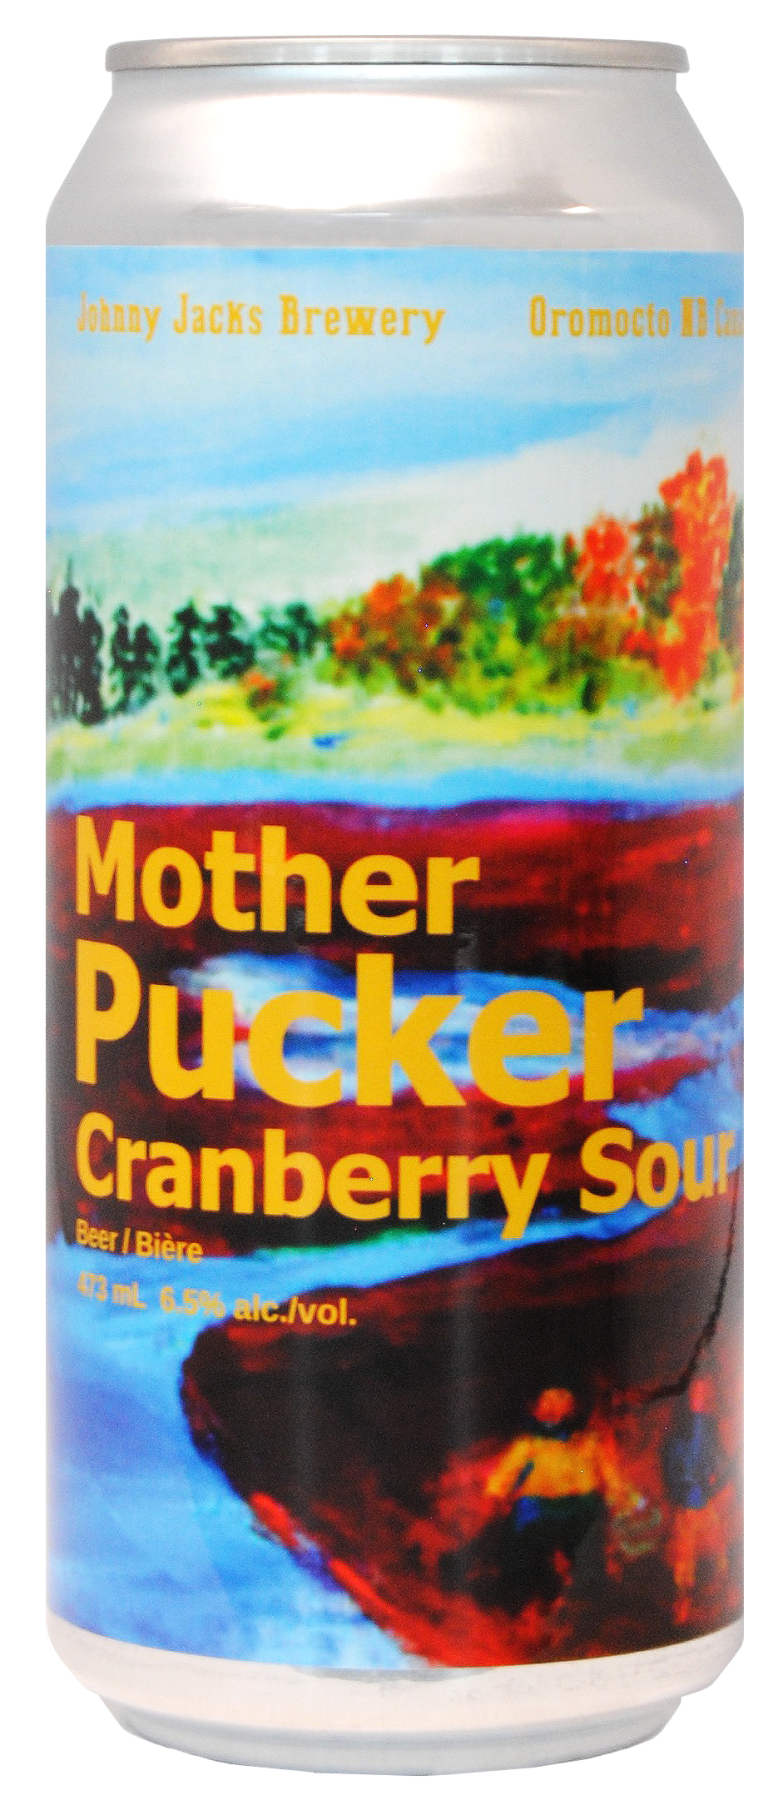 Mother Pucker Cranberry Sour